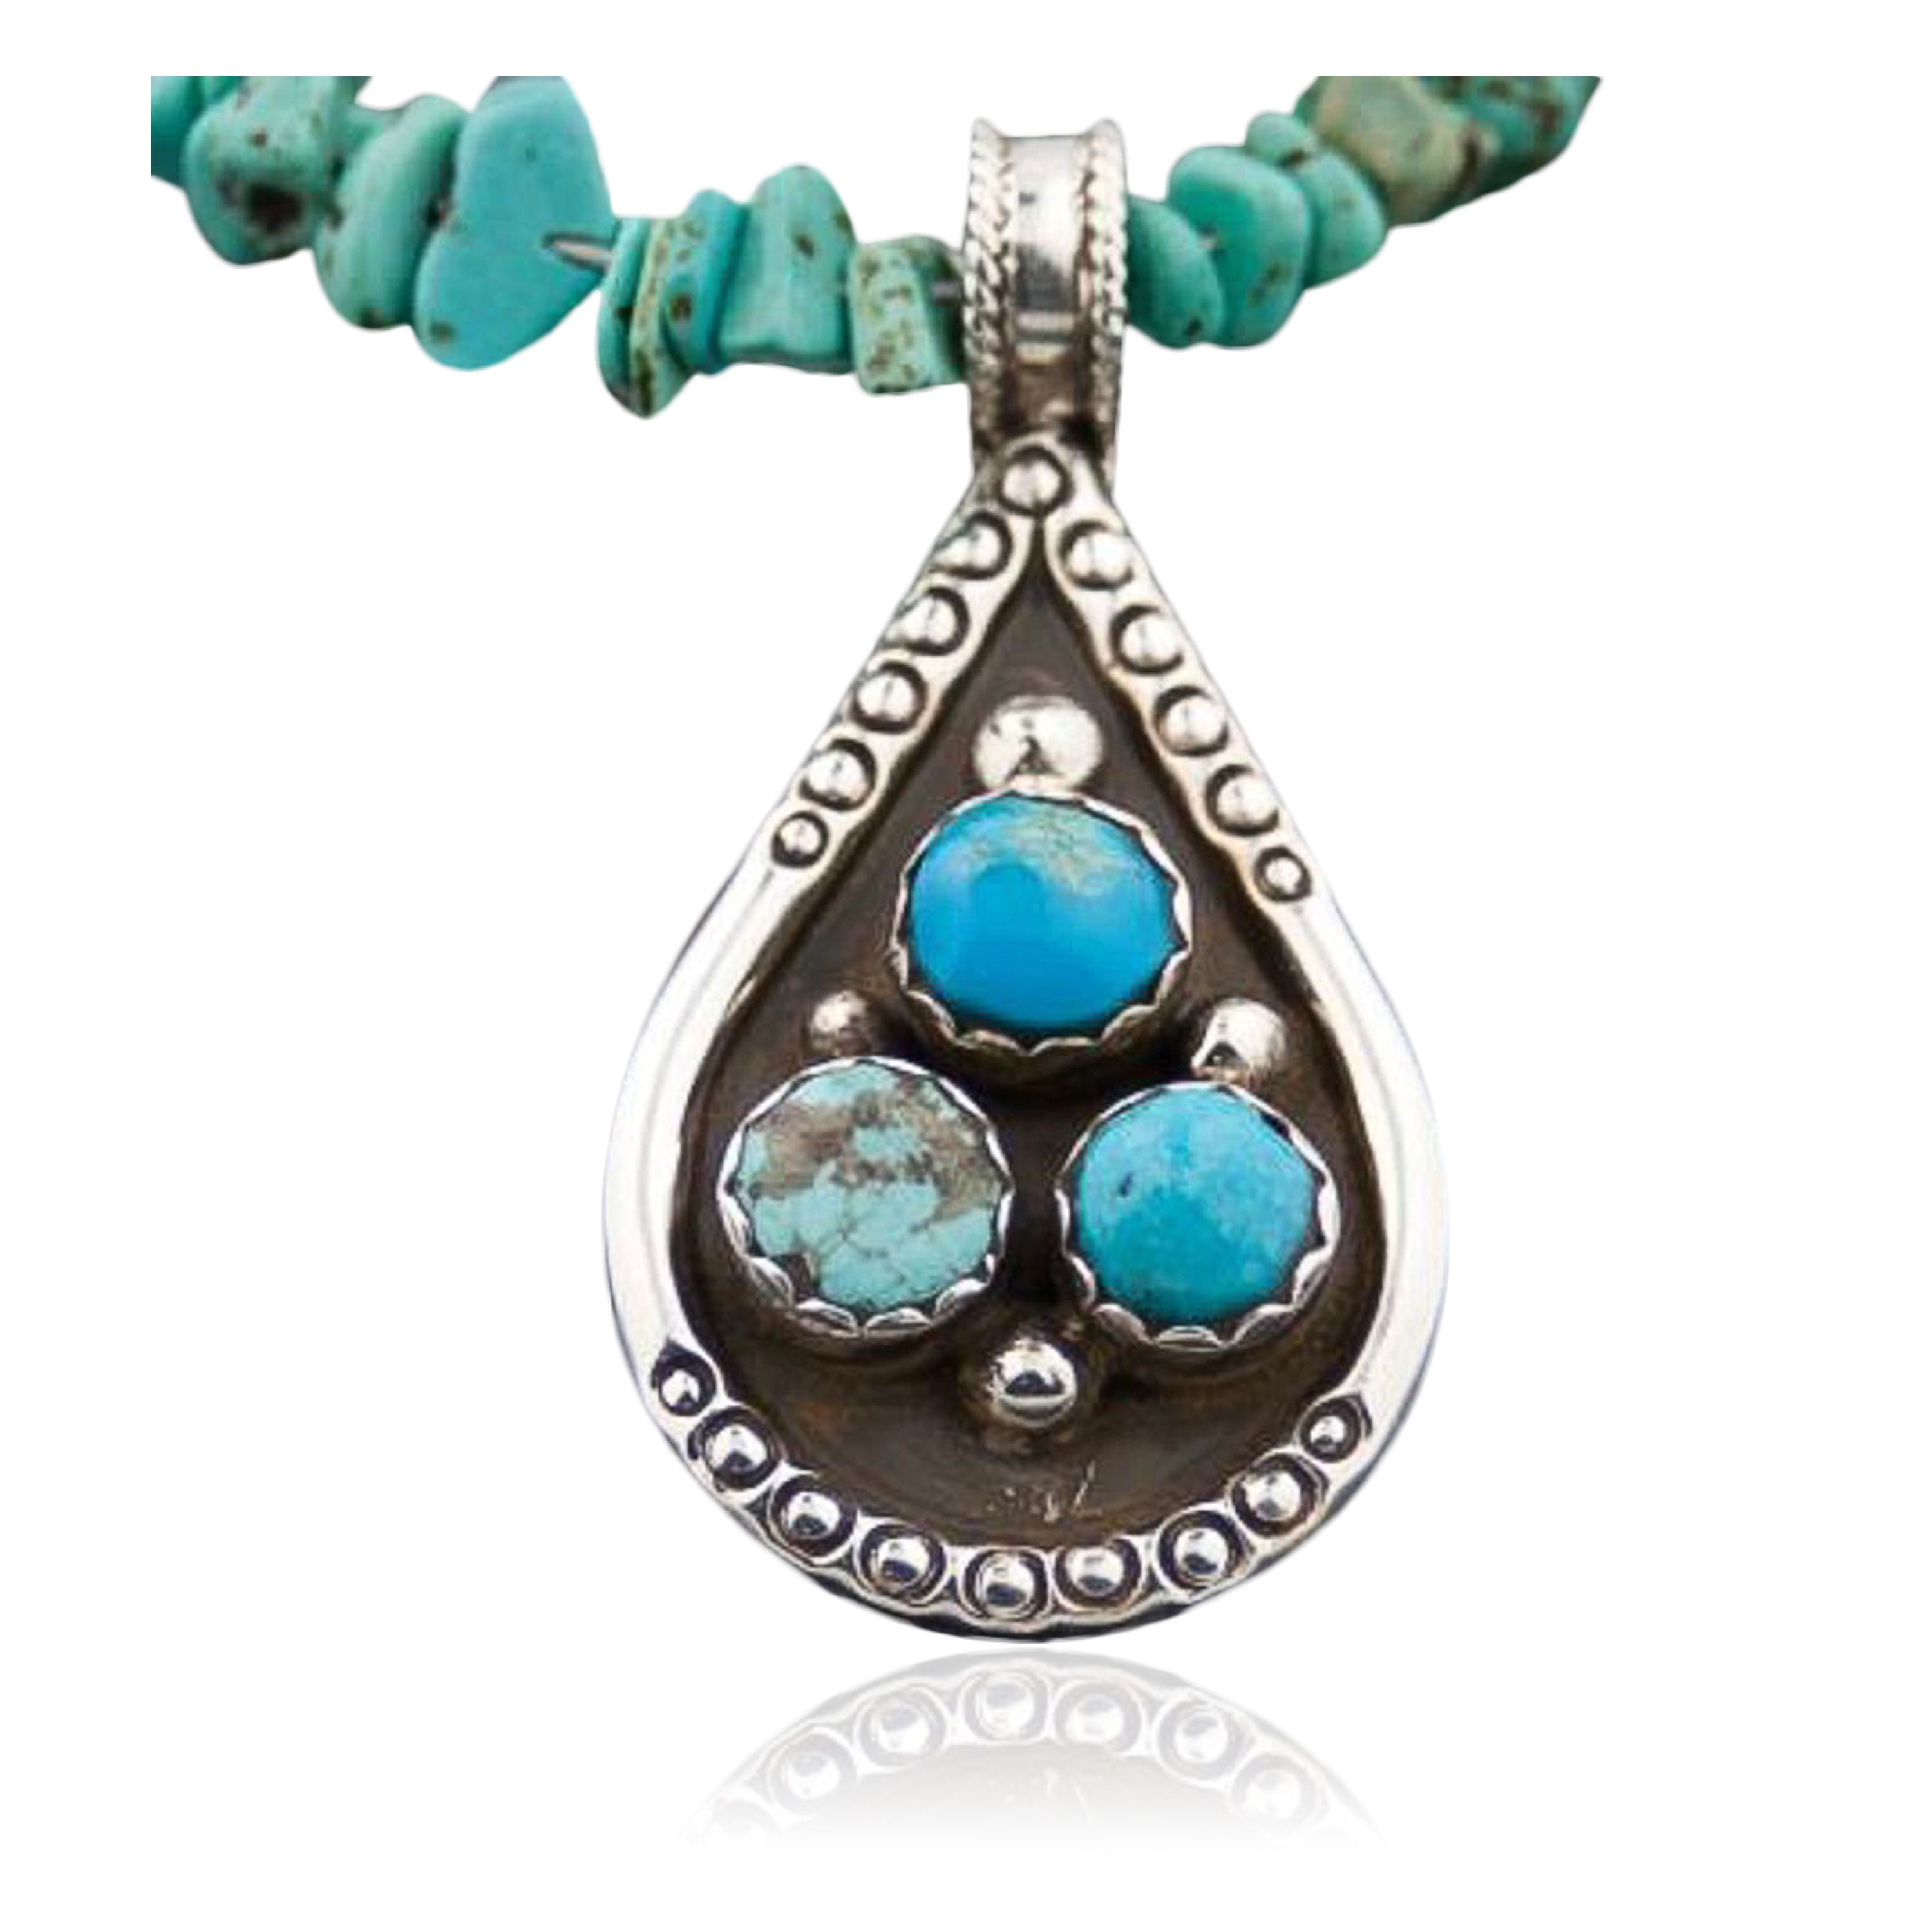 Bridal Shower Gift 925 Sterling Silver Pendant Handmade Boho & Hippie Jewelry Copper Arizona Turquoise Pendant Gorgeous Gemstone Pendant